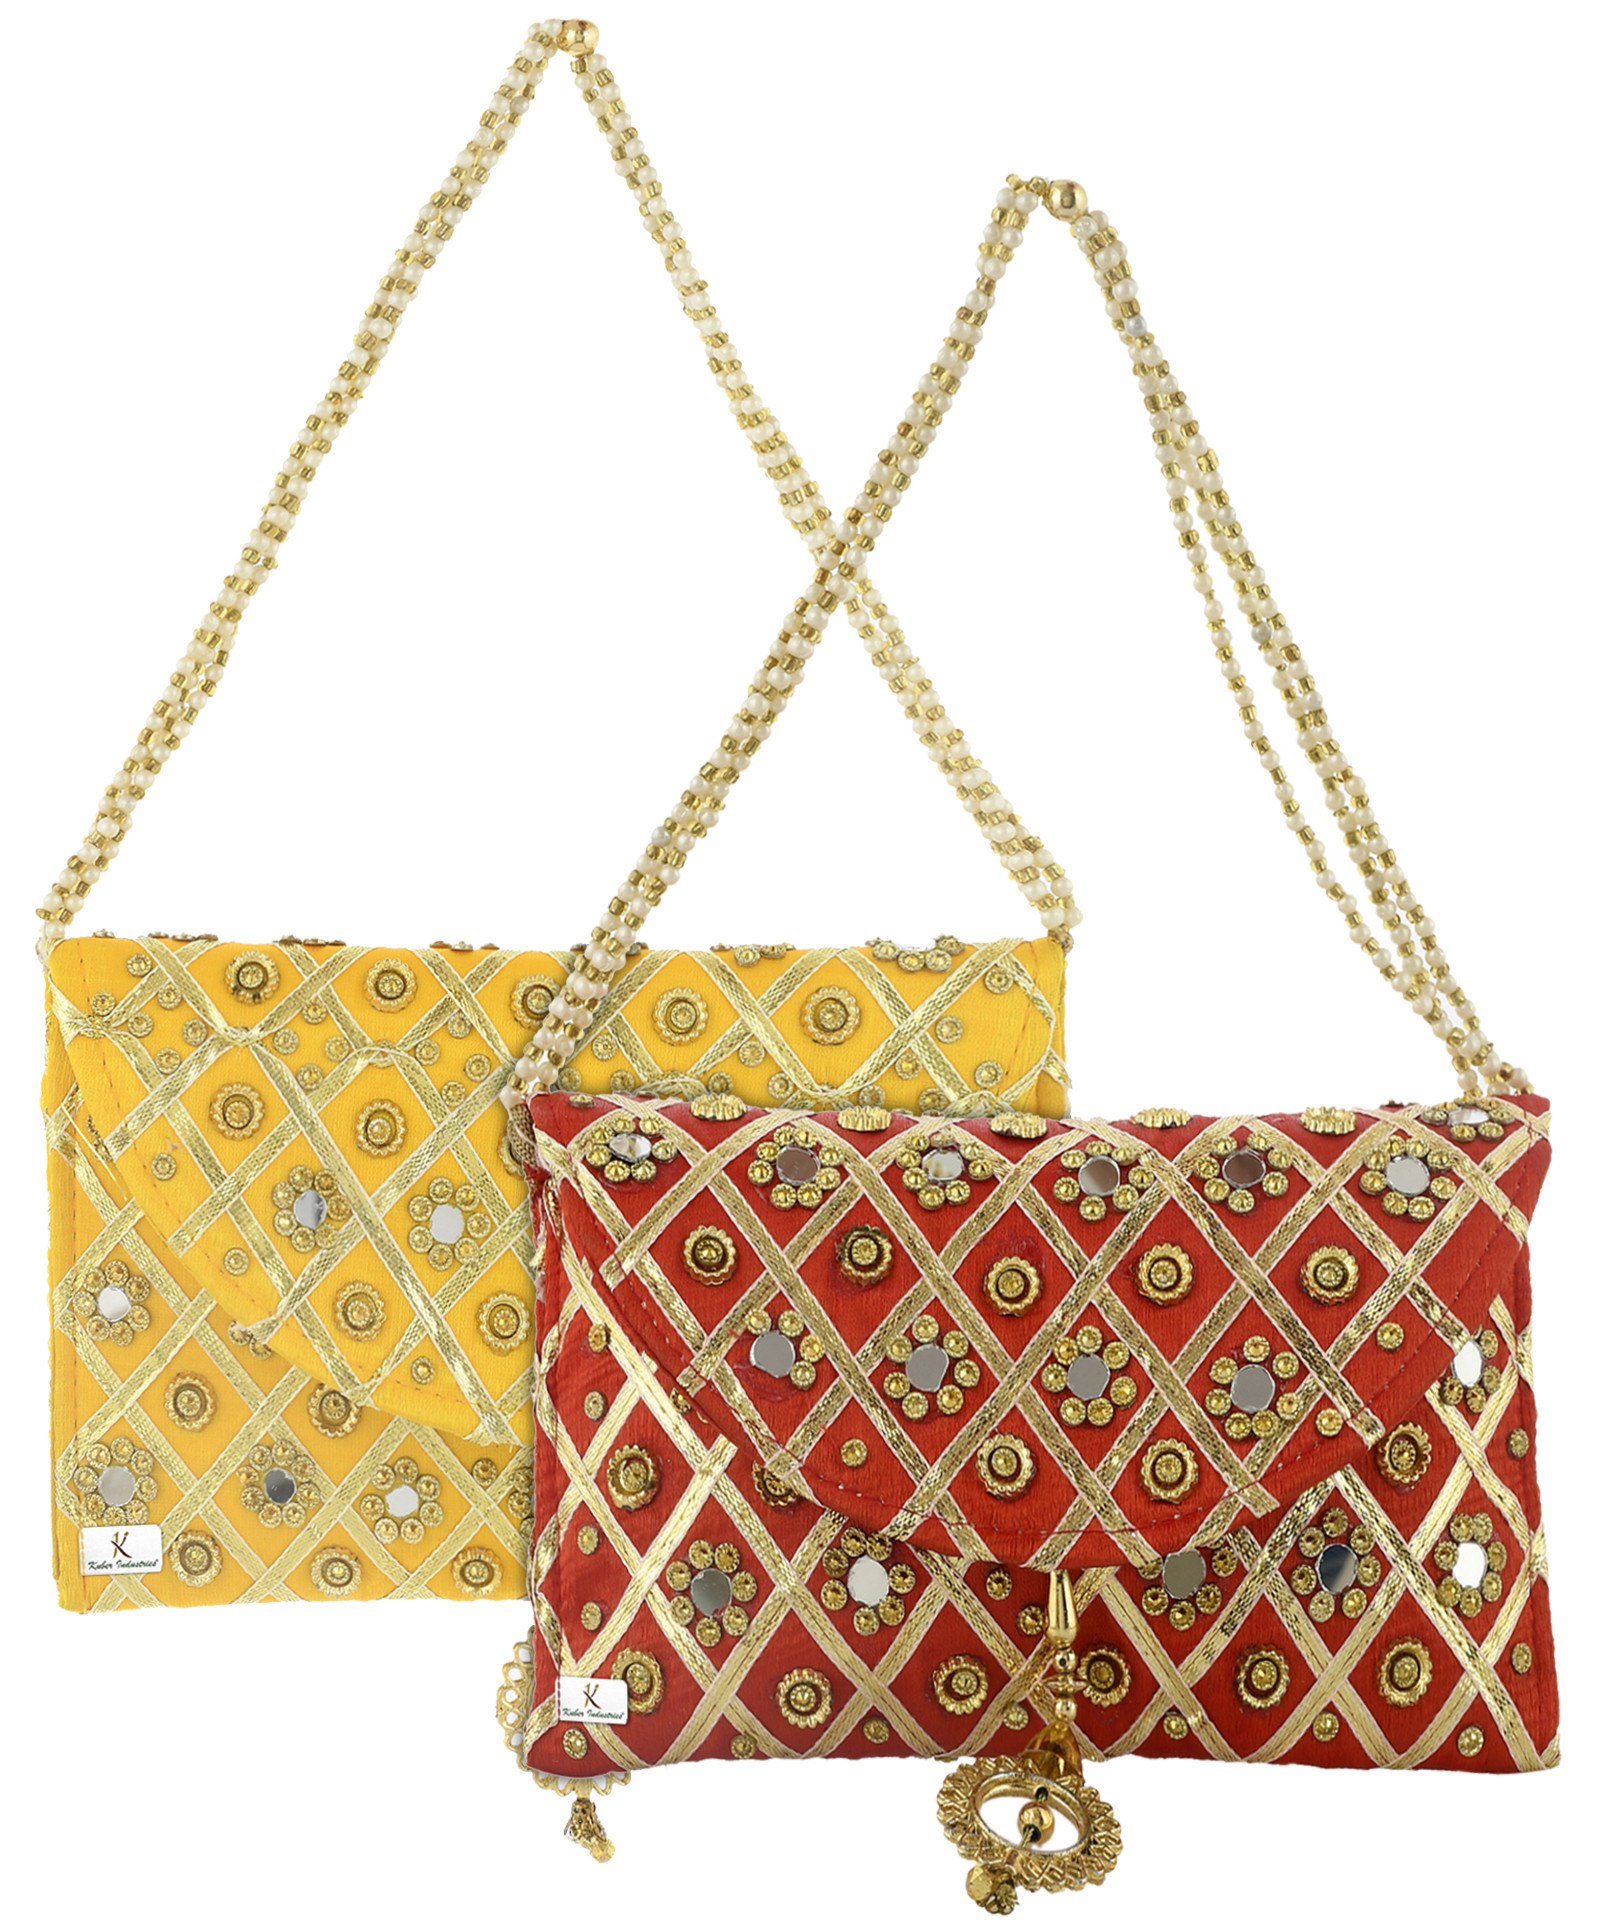 Kuber Industries 2 Pieces Silk Traditional Mirror Work Envelope Clutch/Hand Purse Bag For Women/Girls (Red & Gold)-KUBMRT11473